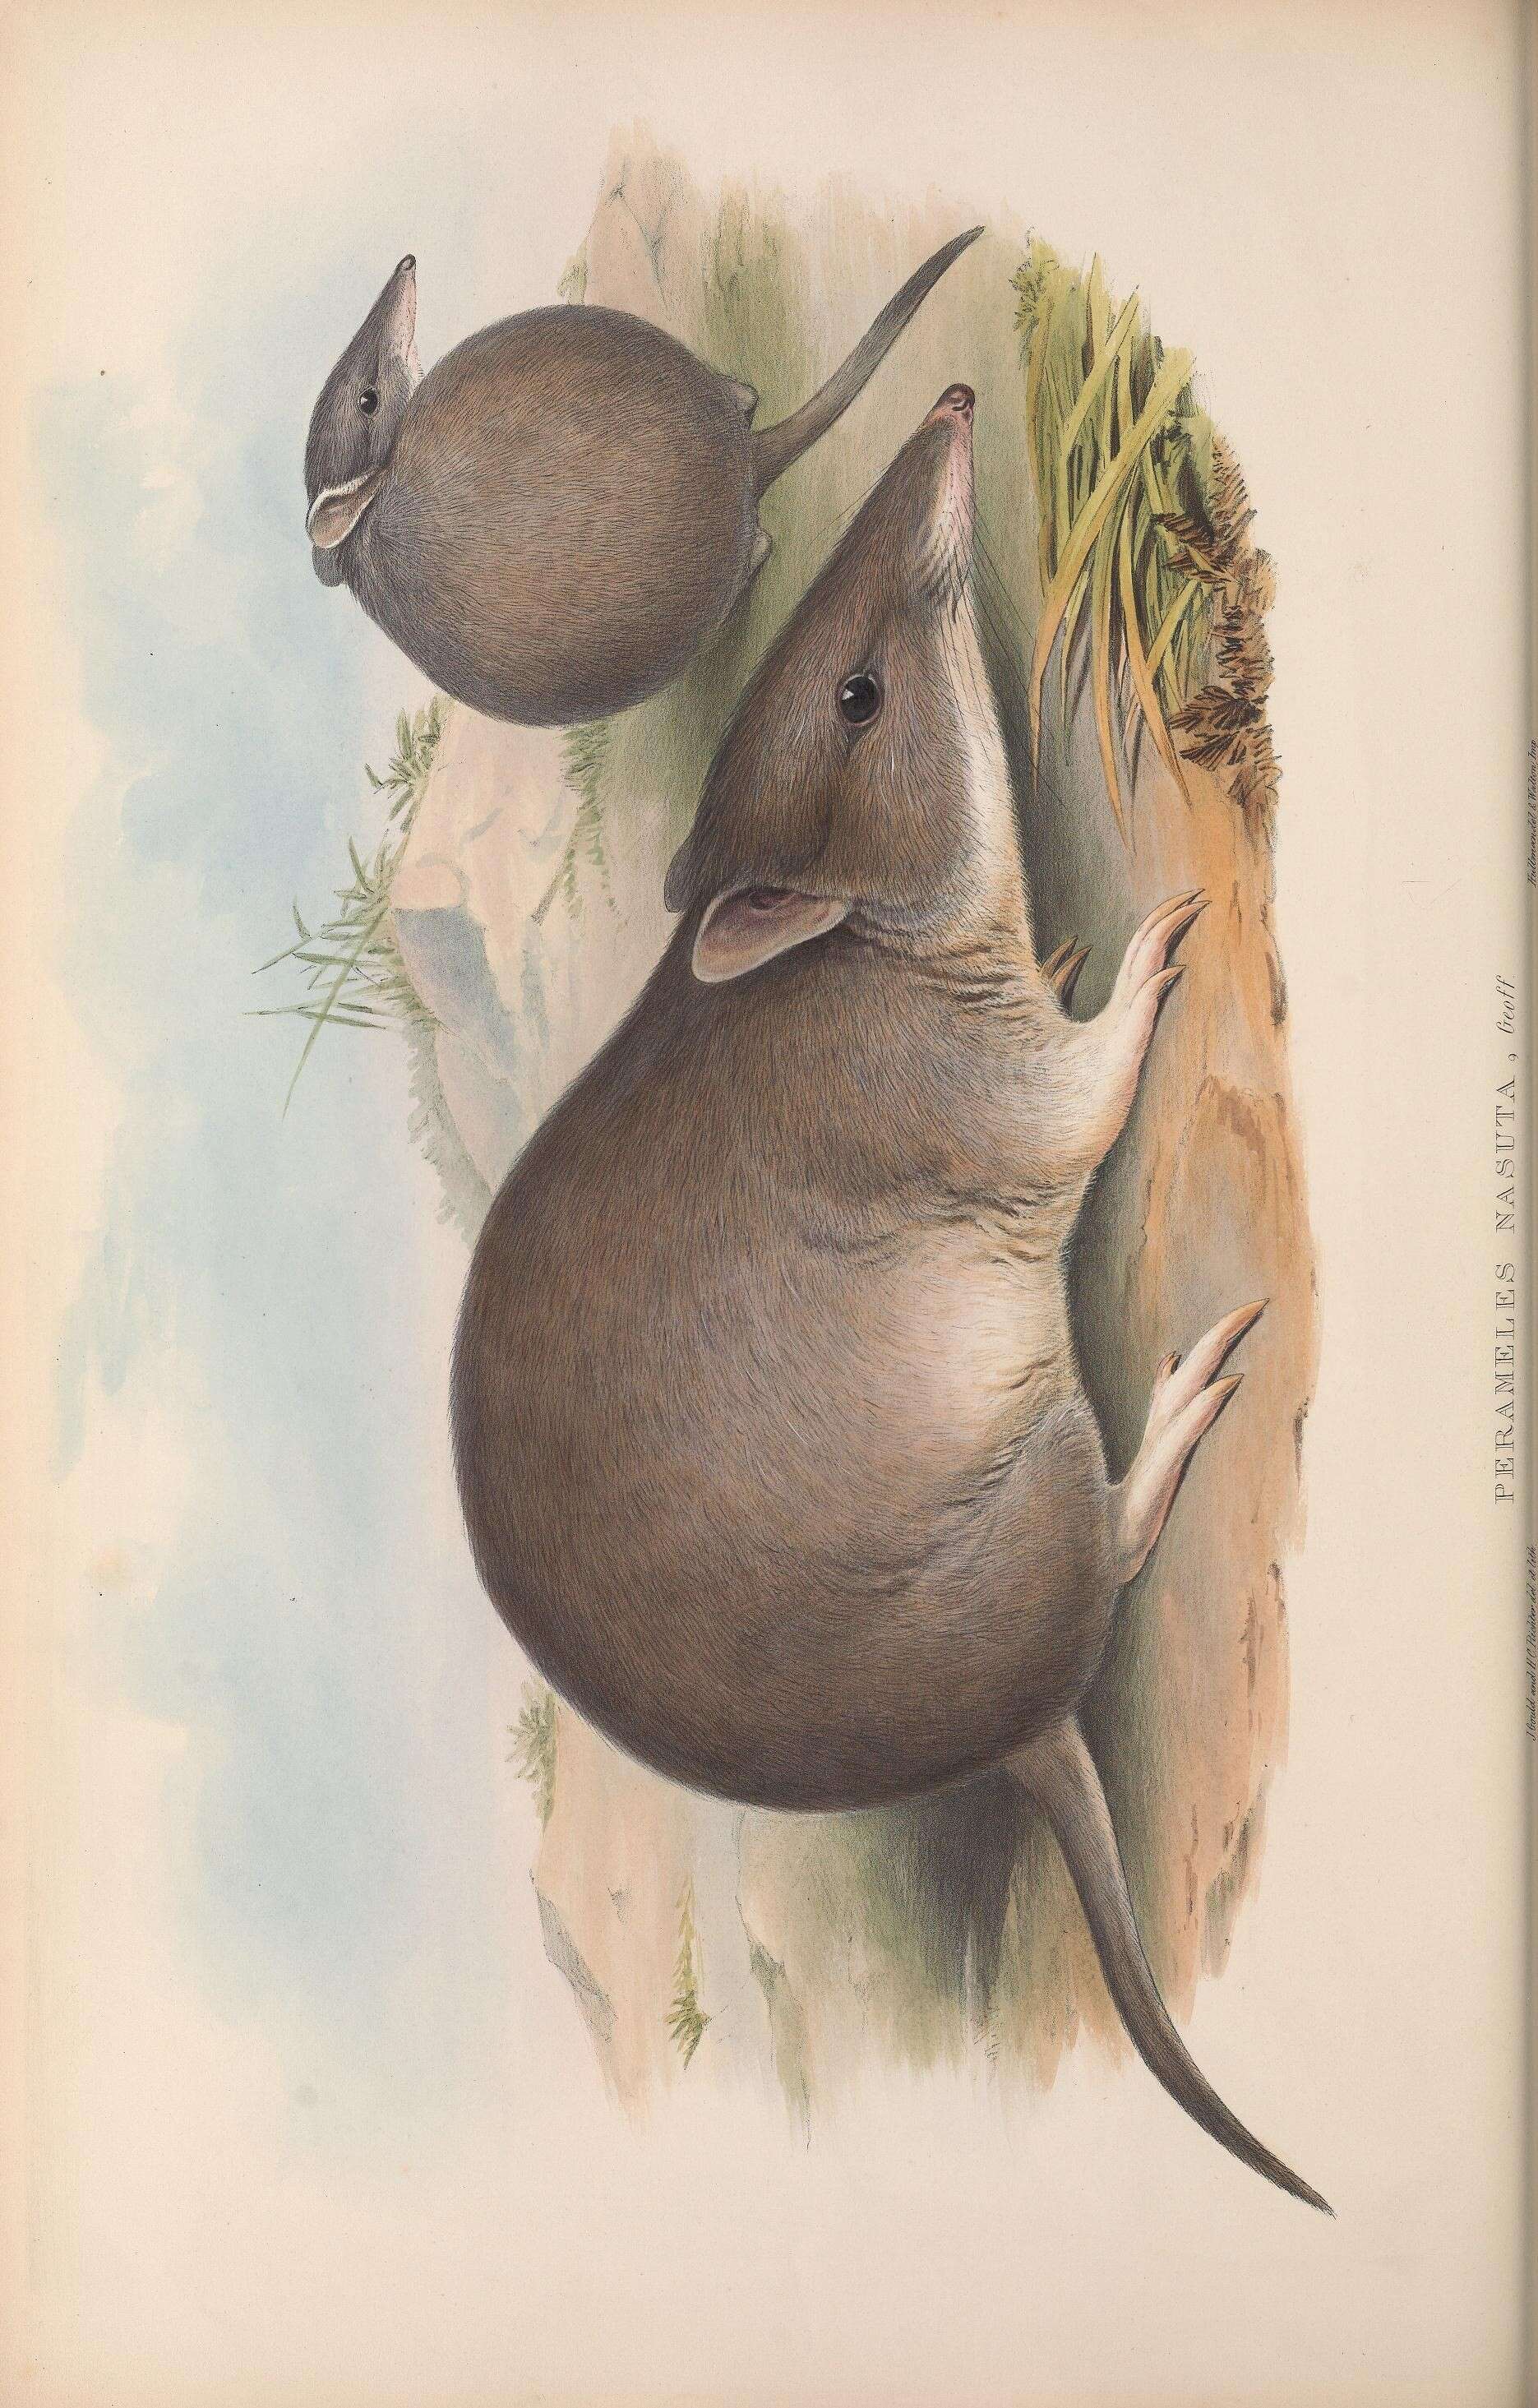 Image of Peramelinae Gray 1825